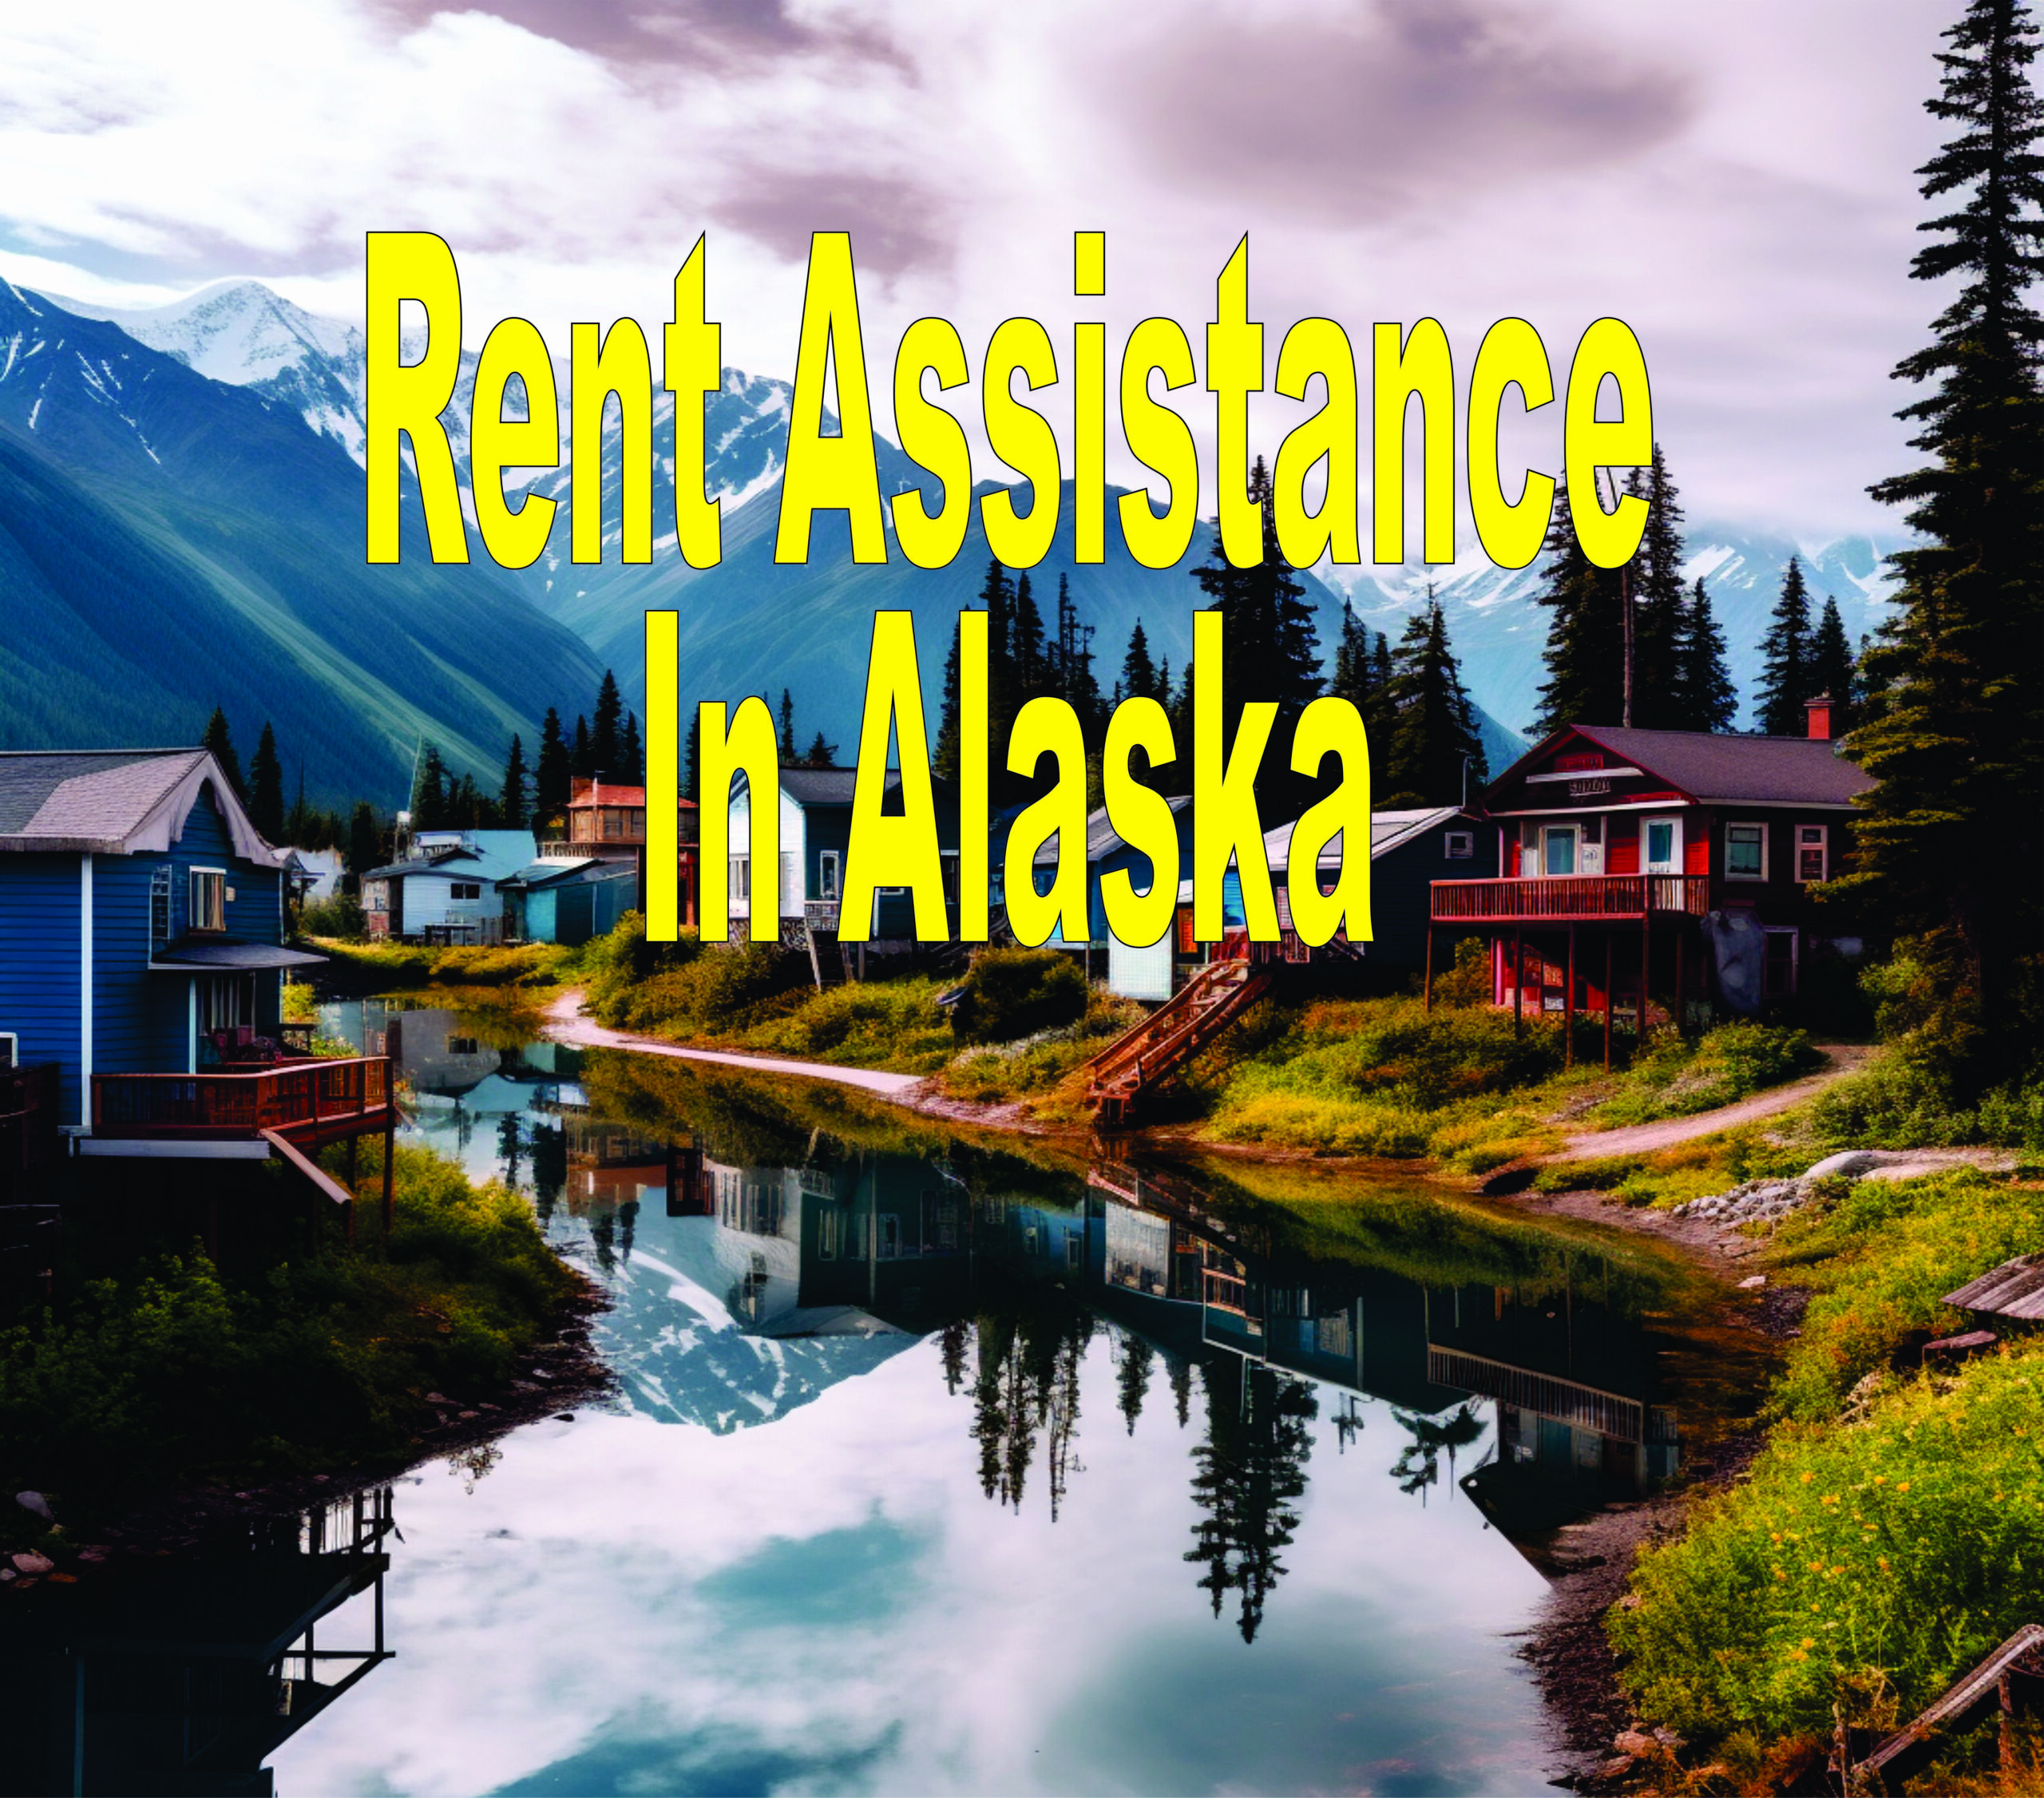 Rent Assistance In Alaska